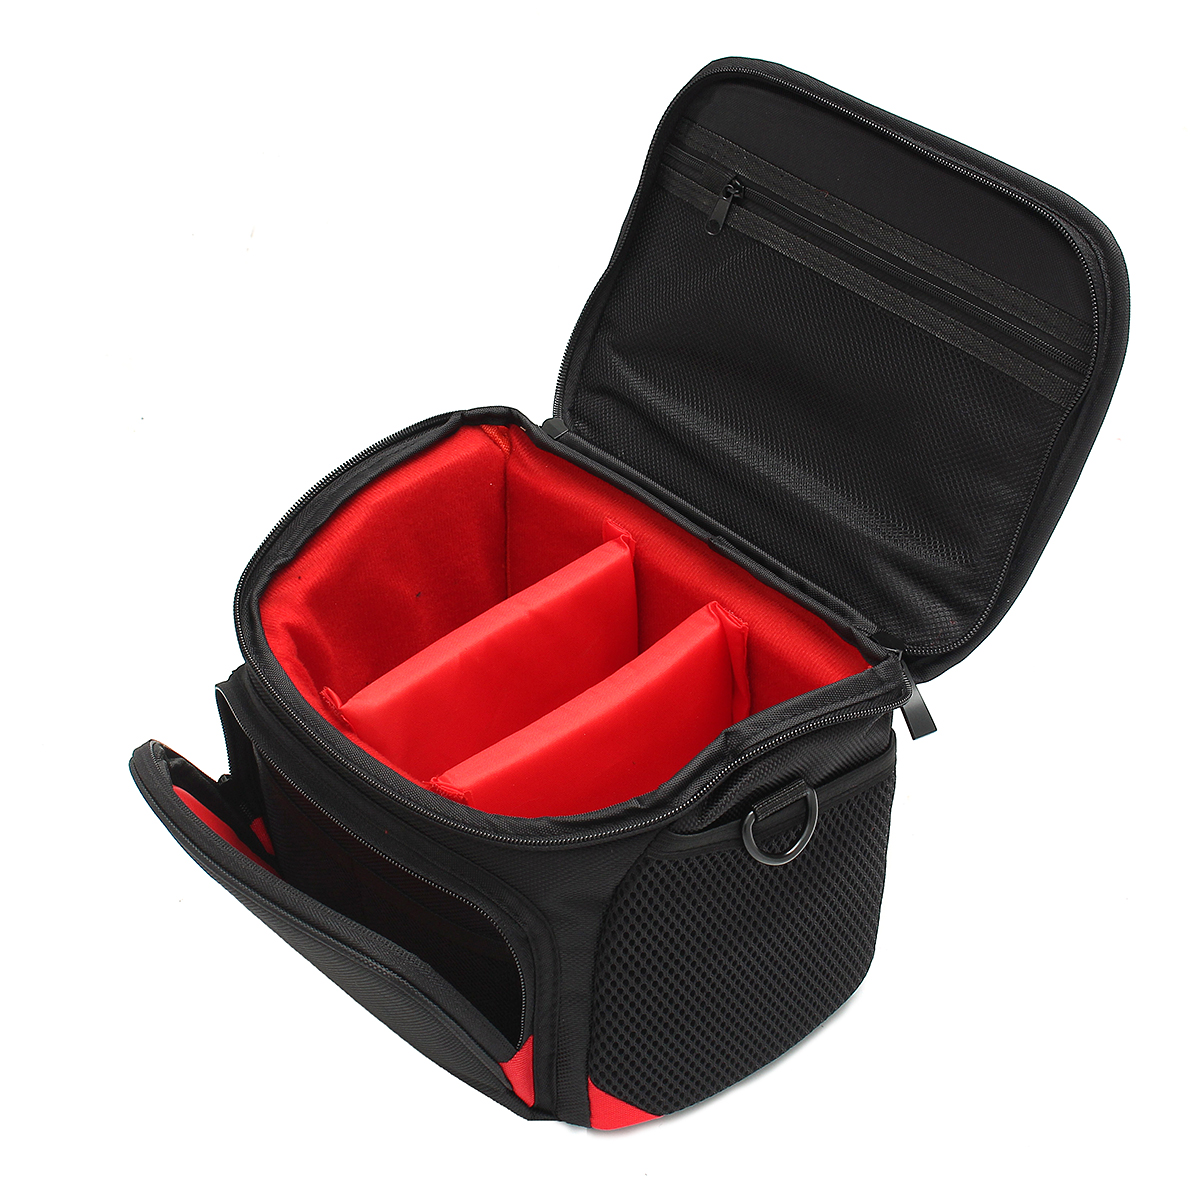 Waterproof-Camera-Shoulder-Bag-Travel-Carrying-Case-with-Rain-Cover-For-DSLR-SLR-Camera-Flash-Lens-1633799-5